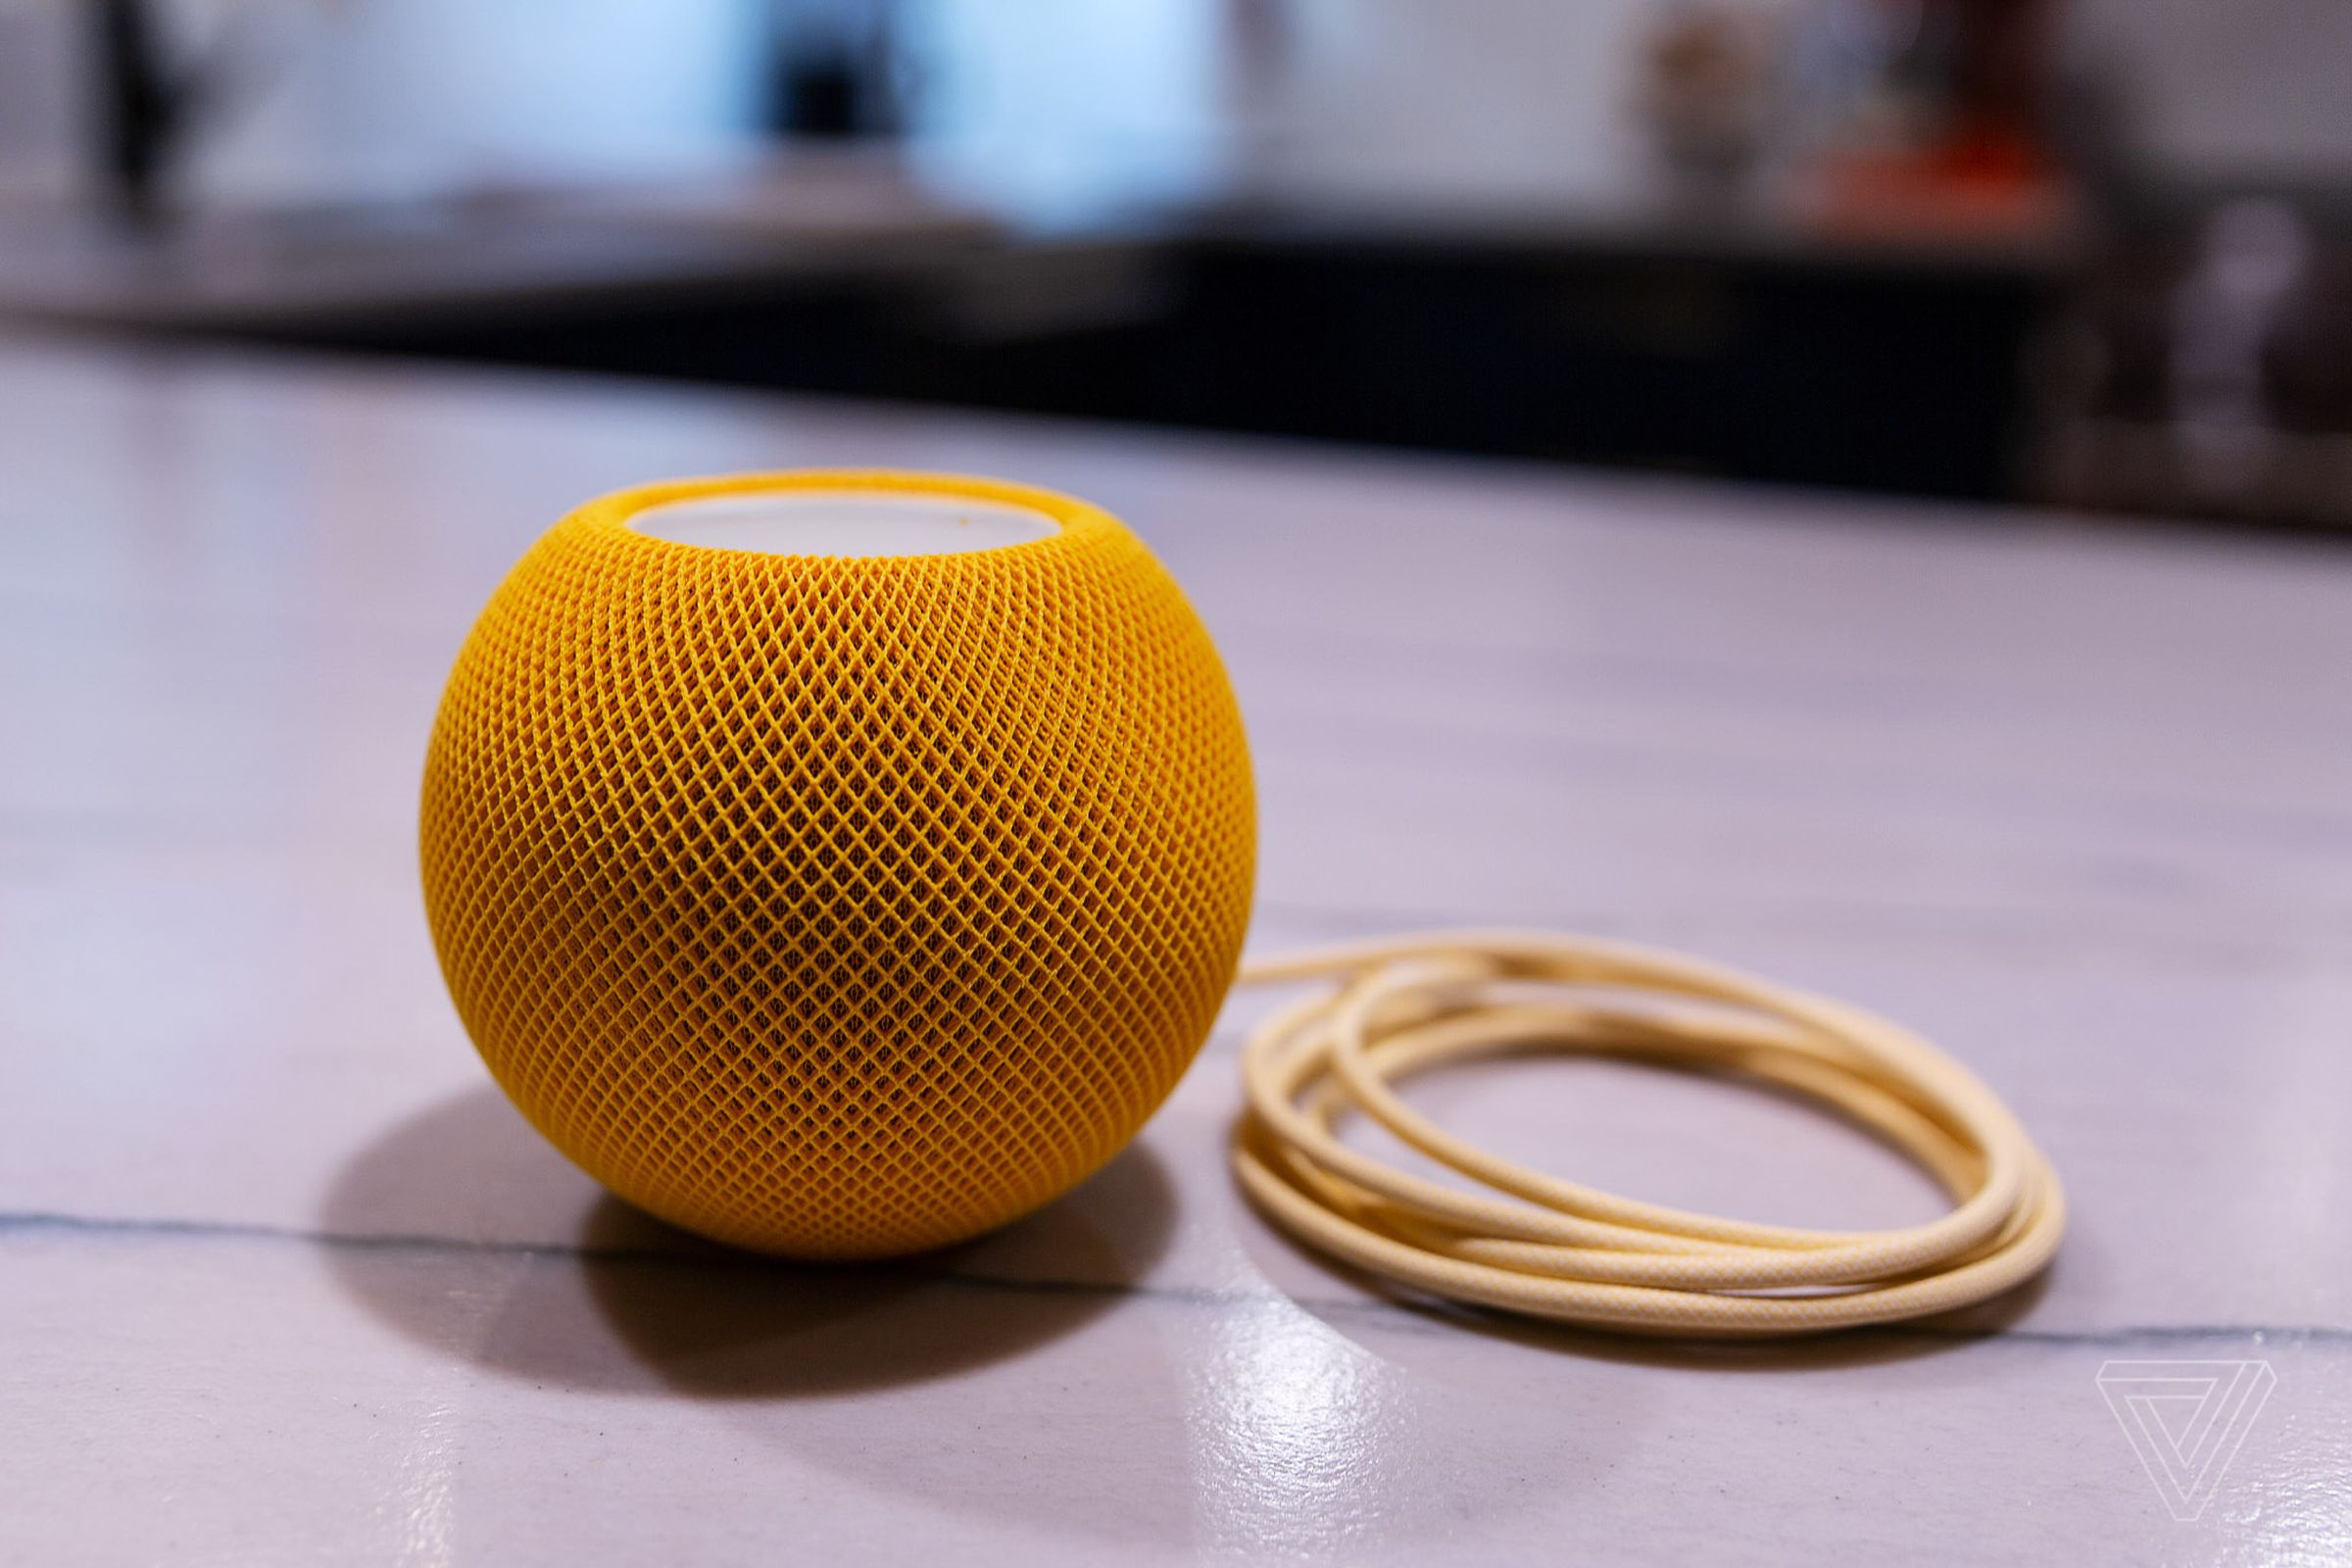 A photo of Apple’s yellow HomePod Mini speaker.